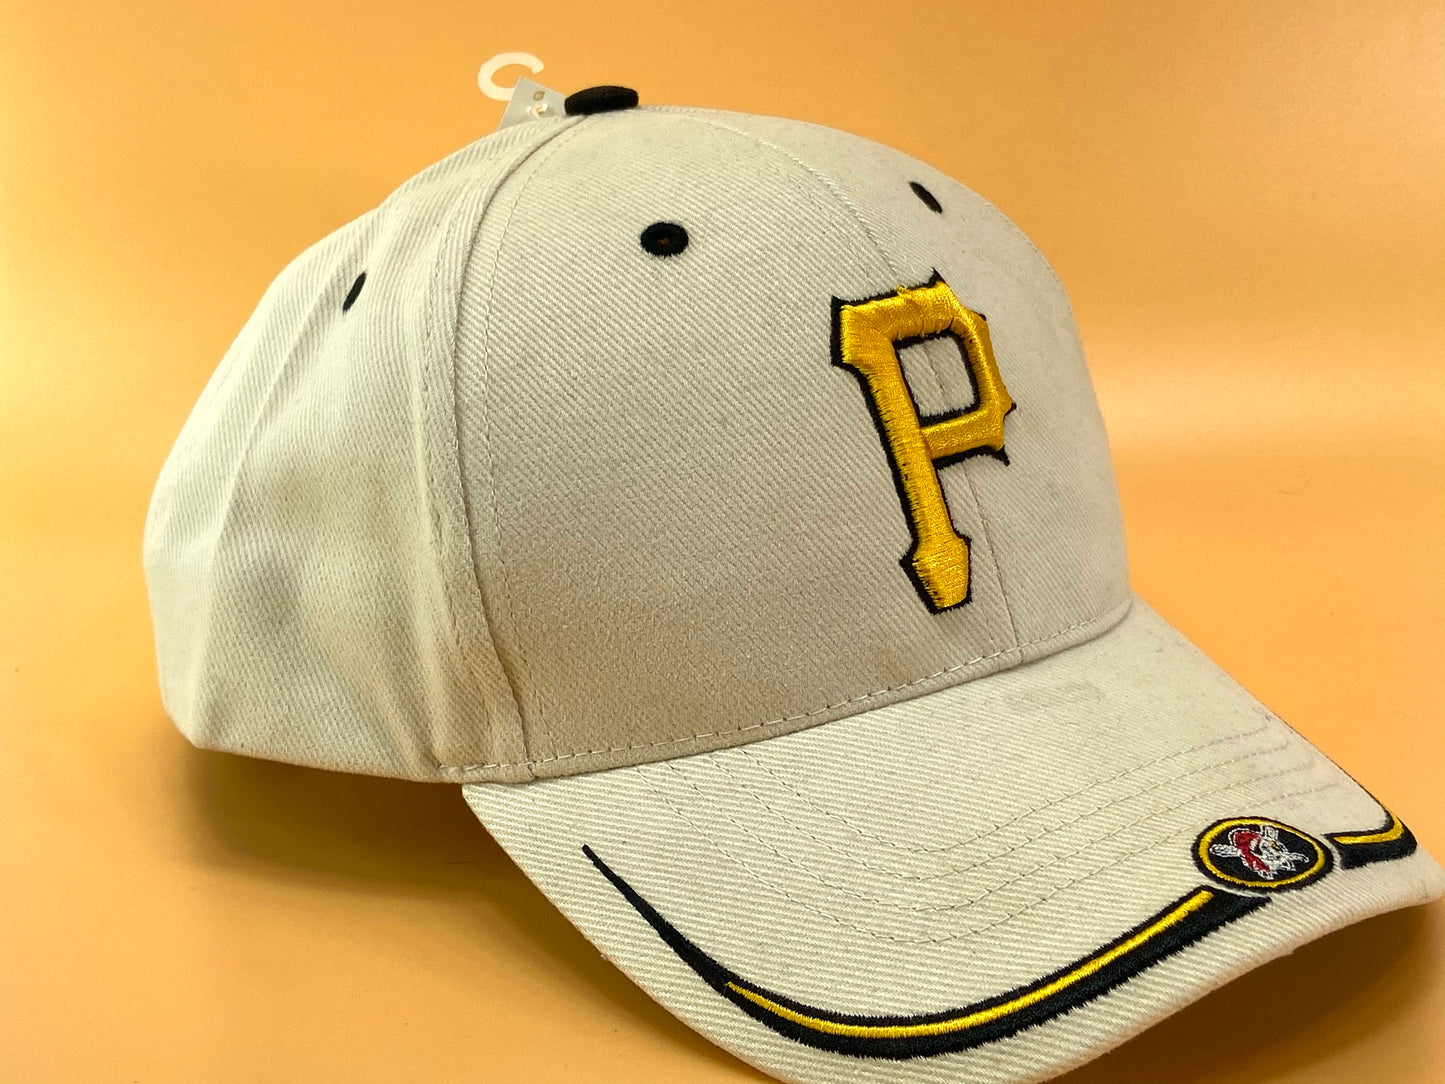 Pittsburgh Pirates NOS Vintage MLB Cream "Stache" Cap by Twins Enterprise